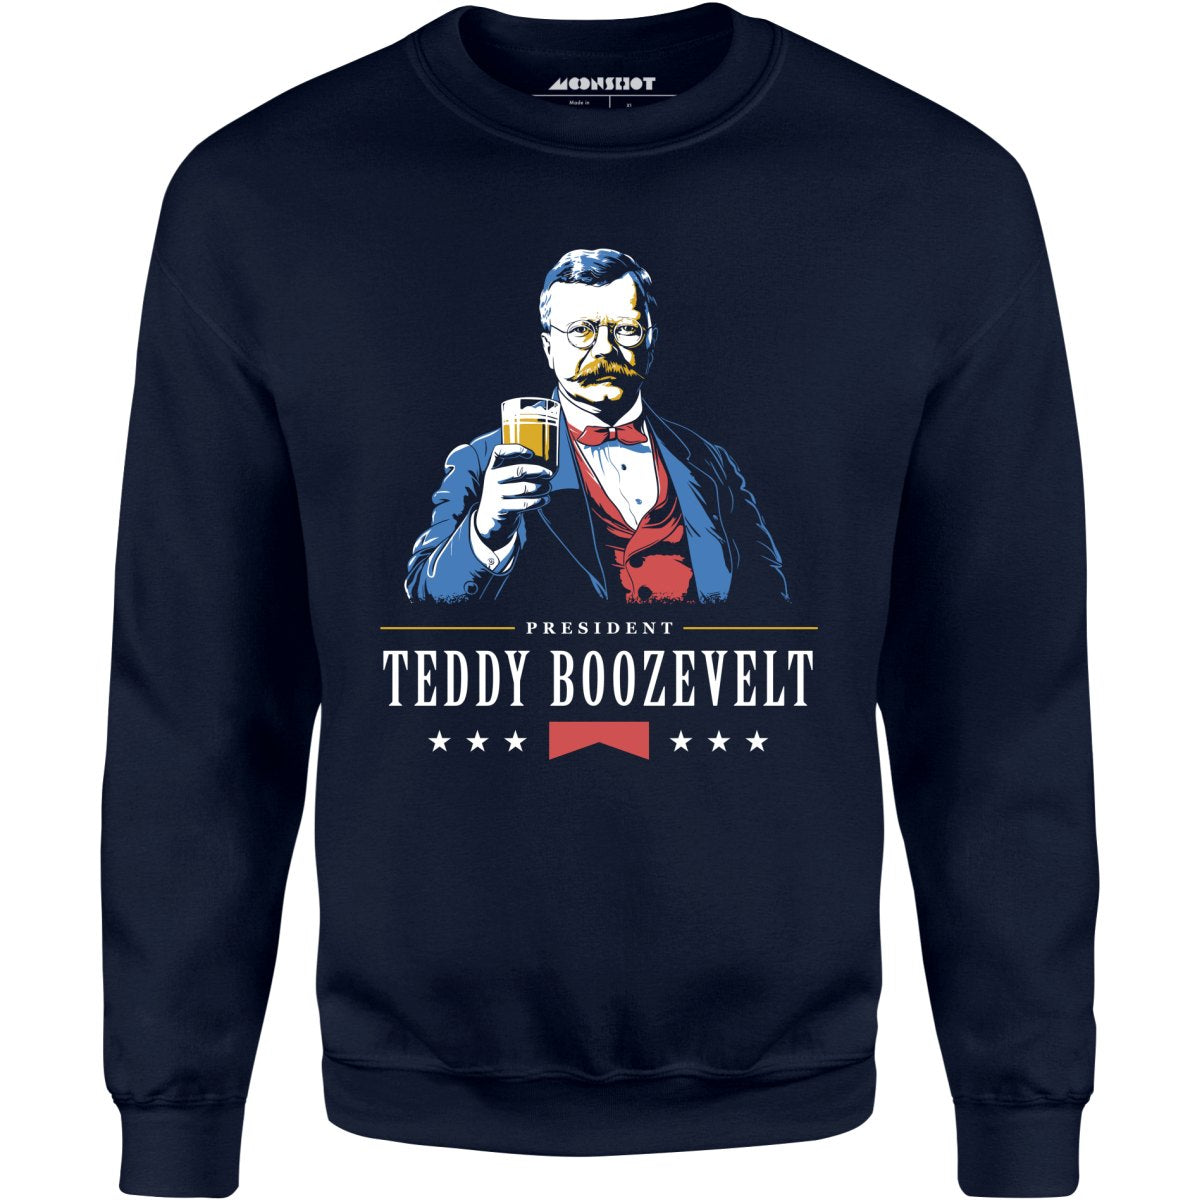 President Teddy Boozevelt - Unisex Sweatshirt